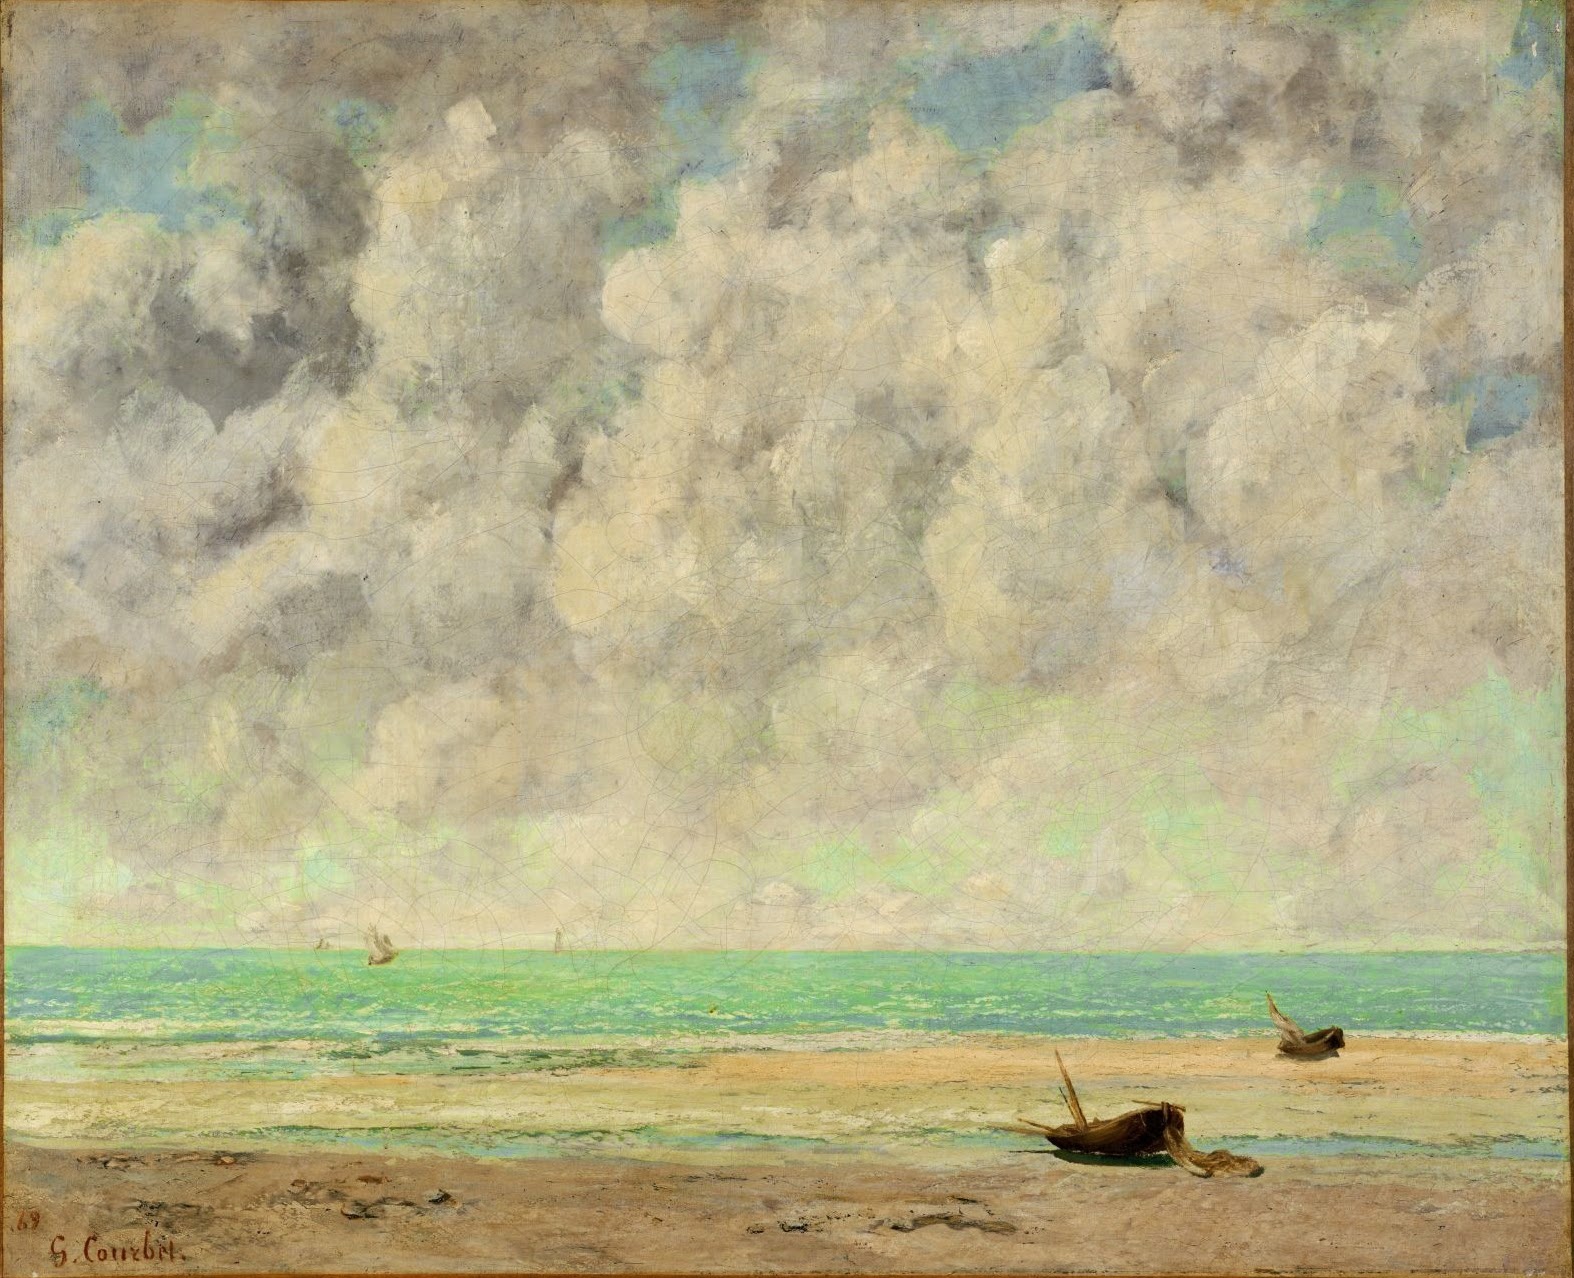 Gustave+Courbet-1819-1877 (41).jpg